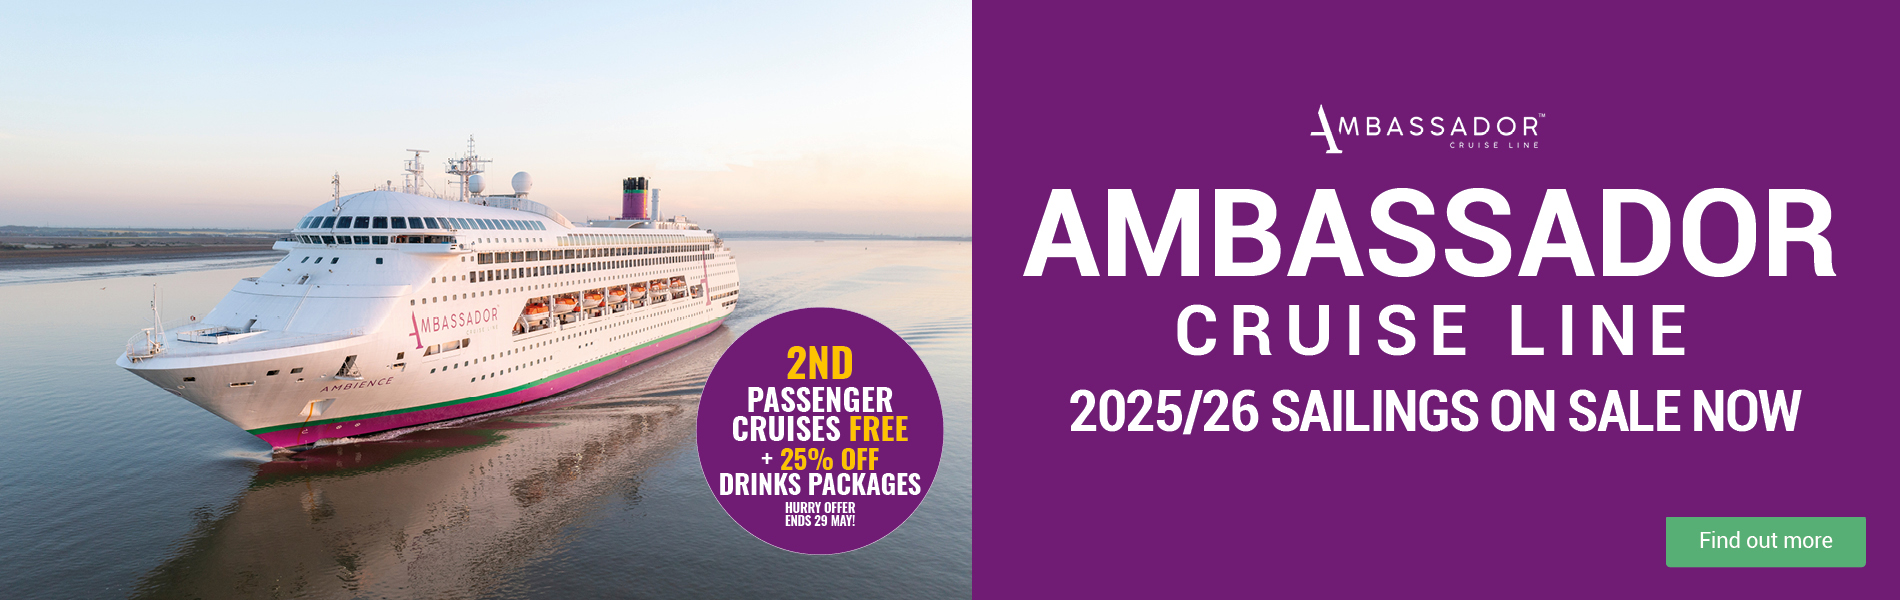 Ambassador Cruise Line Campaign